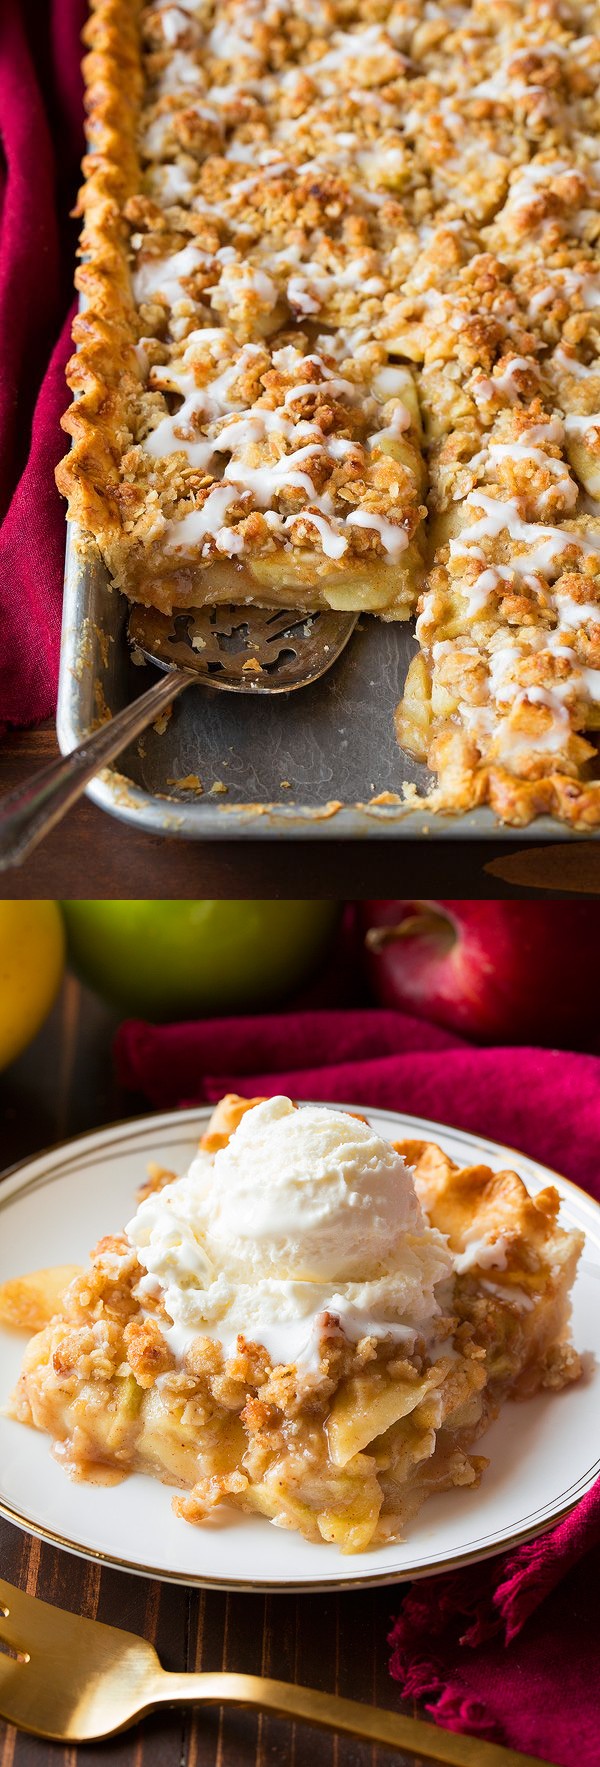 Crumb-Topped Apple Slab Pie